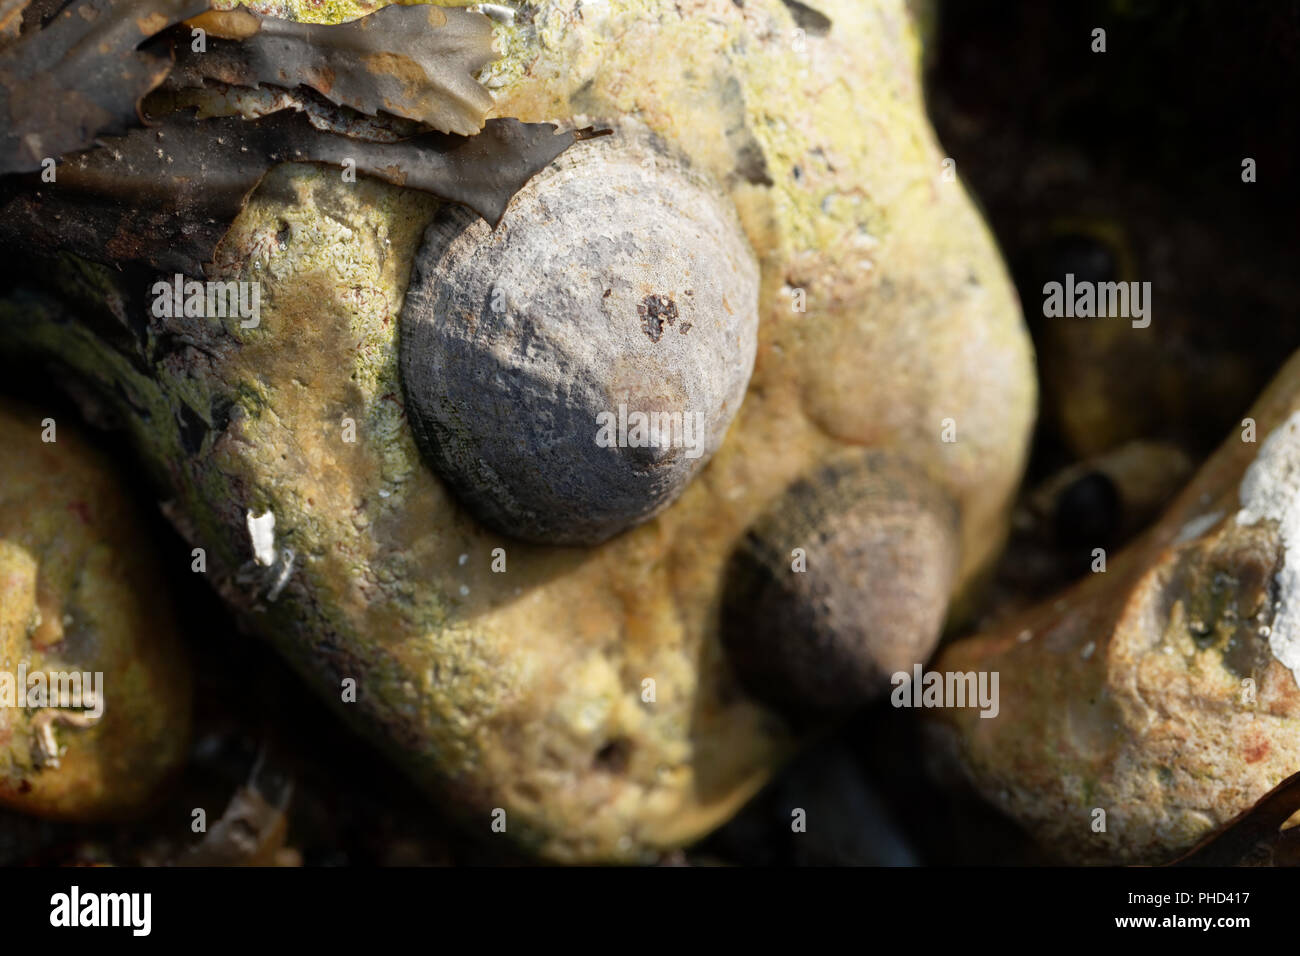 Common limpet snail (Patella vulgata) on a rock. Stock Photo